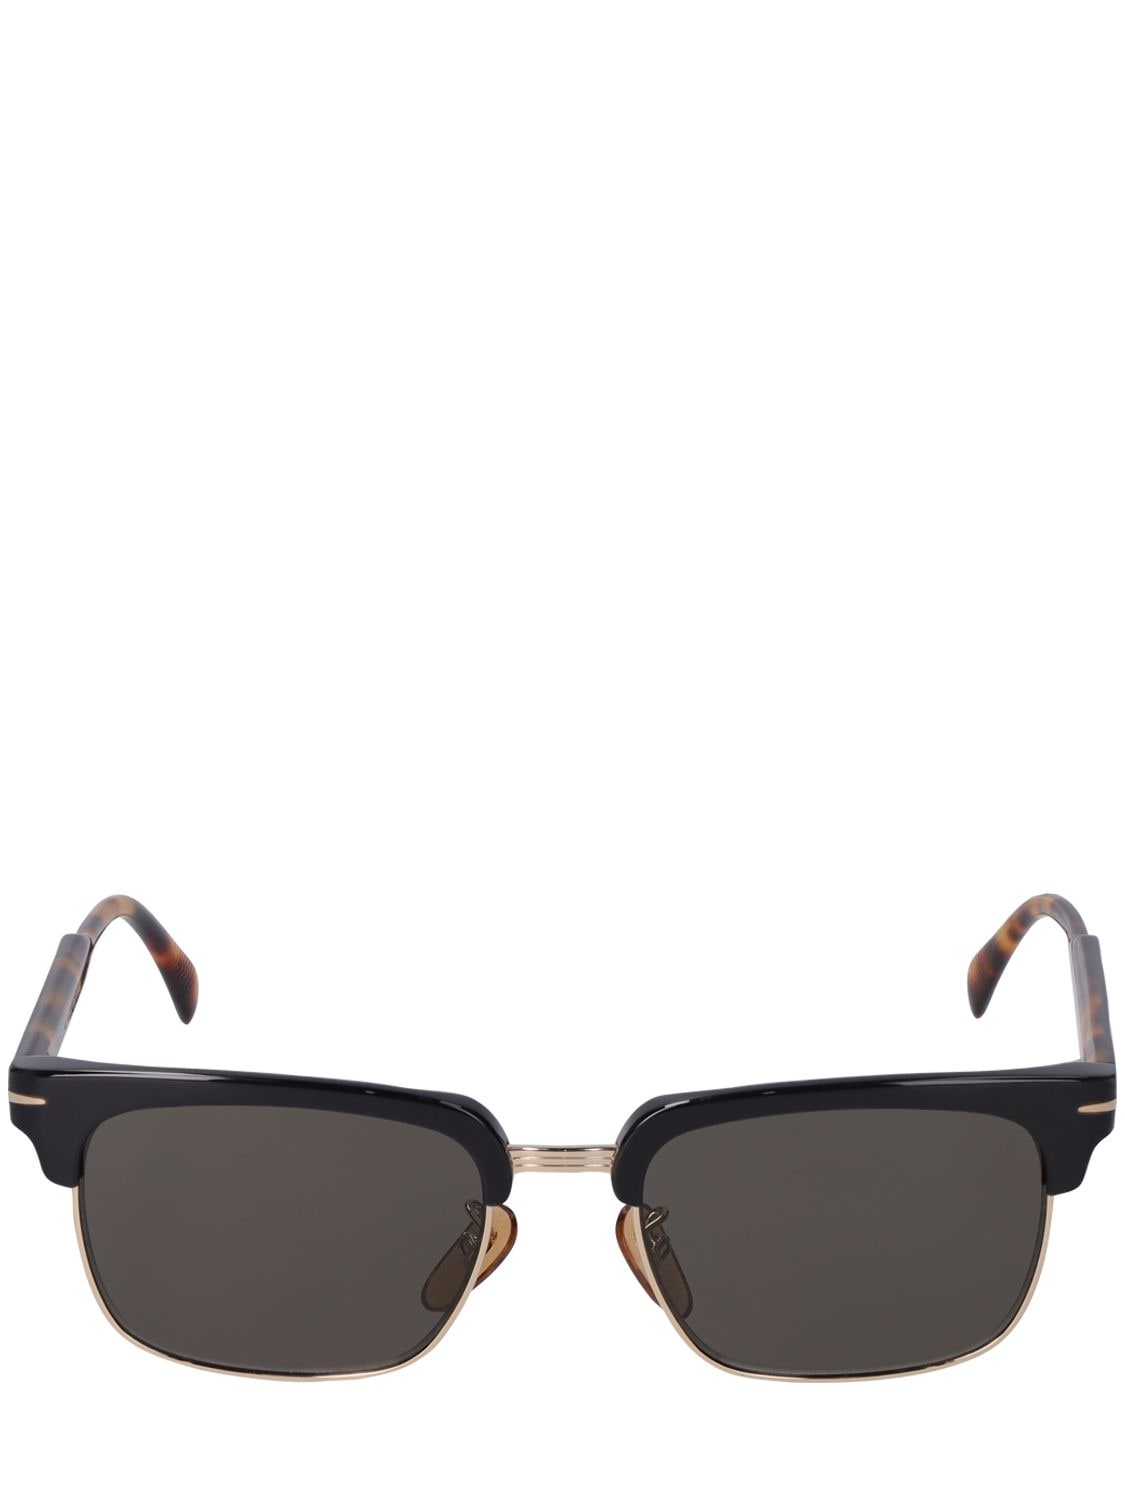 Image of Db Squared Metal Sunglasses